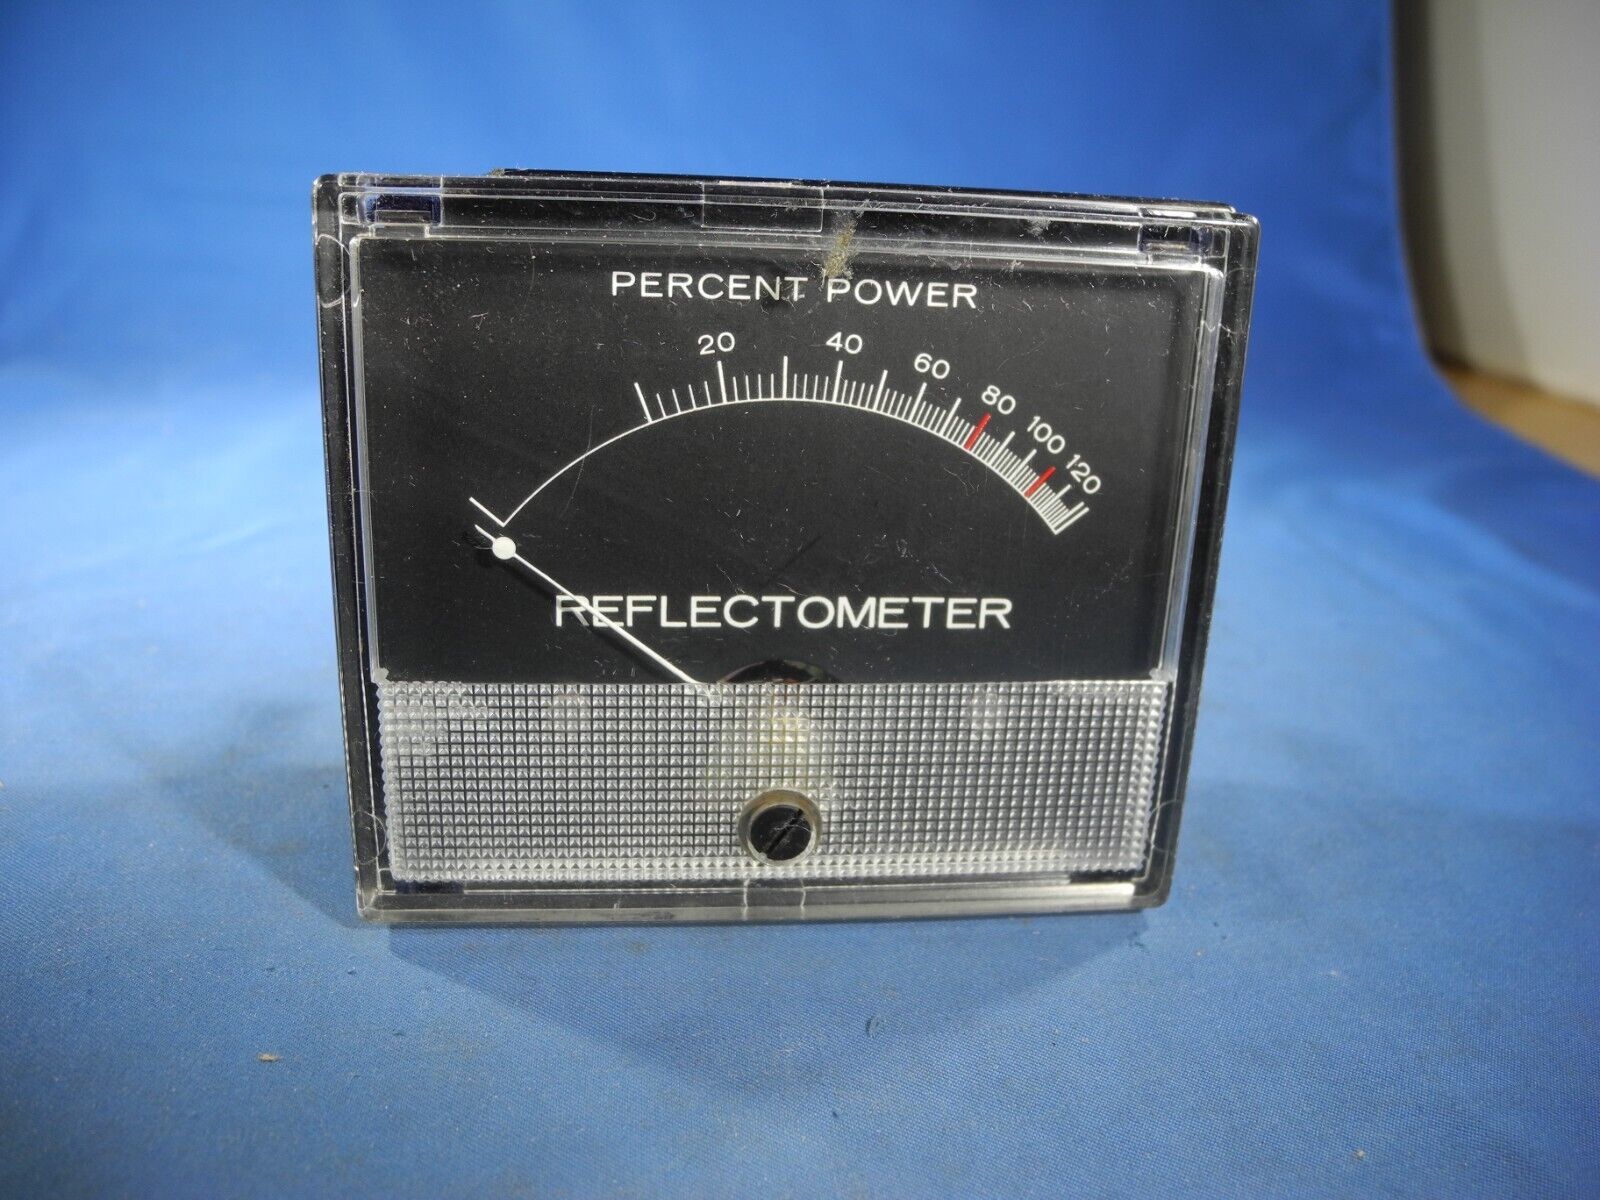 WESTON PANEL METER - REFLECTOMETER -  0-120 MODEL 1936 - PERCENT POWER 